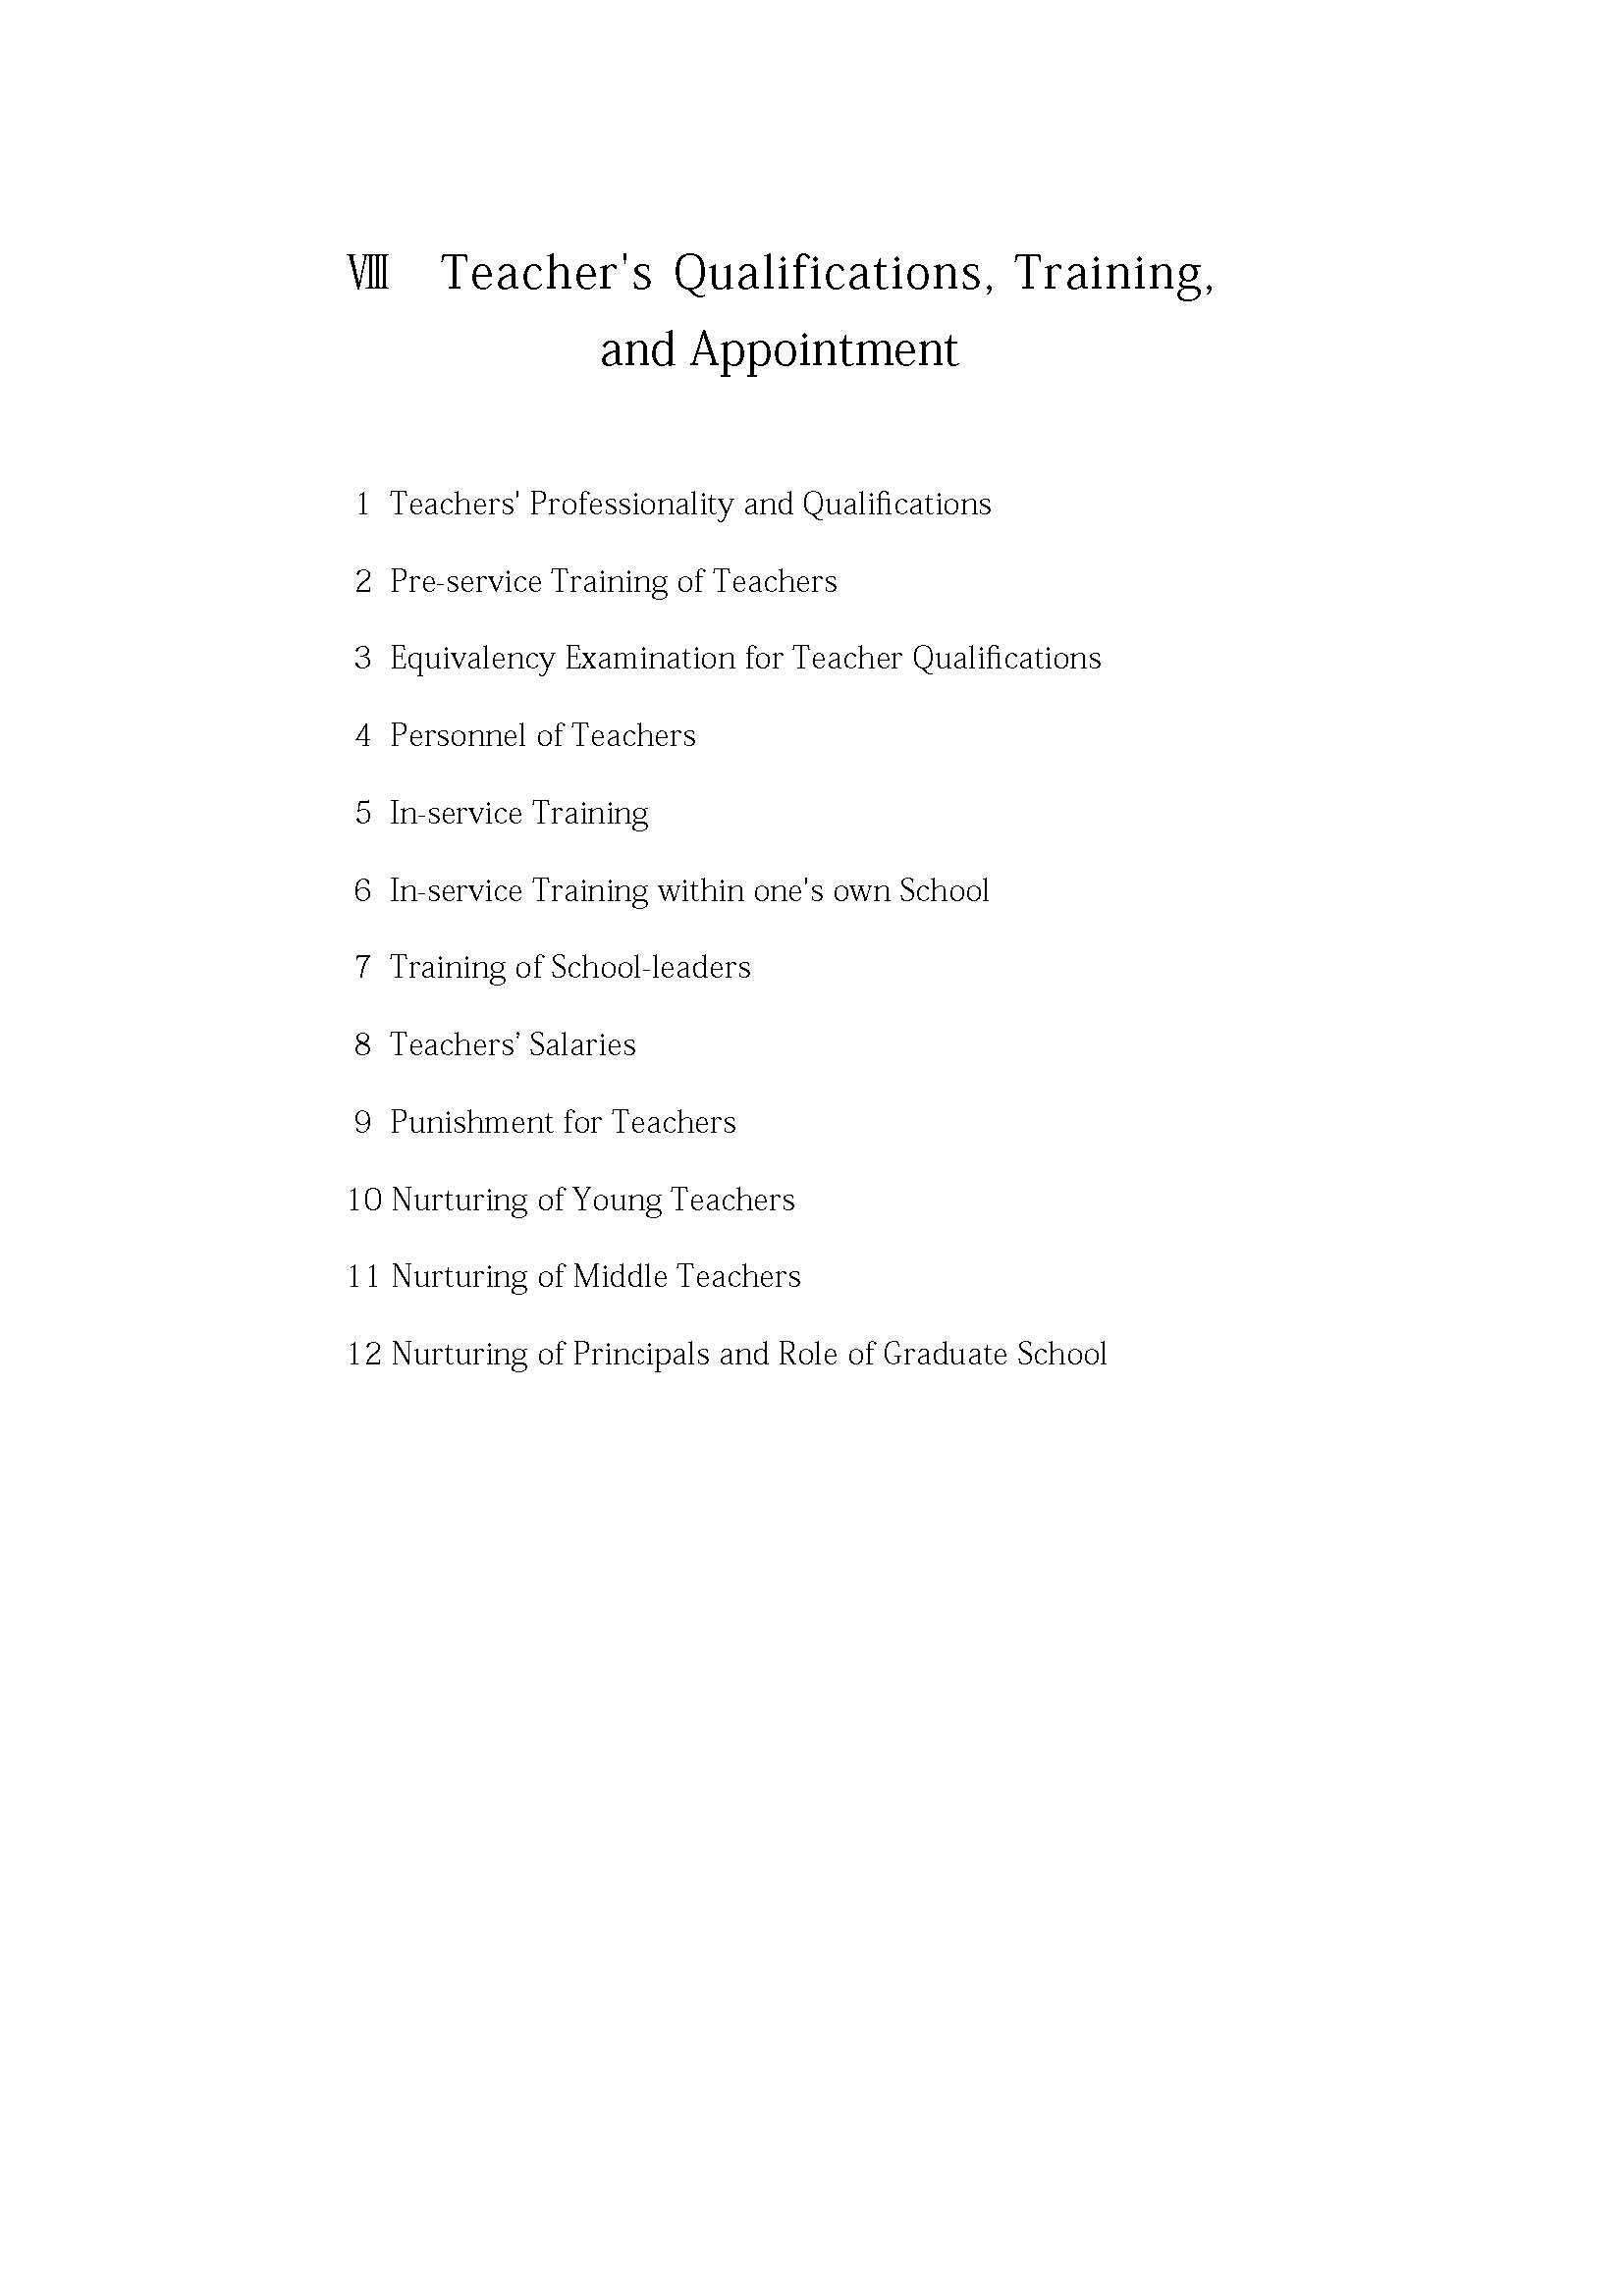 VIII Teacher's Qualifications/Training/Appiontment